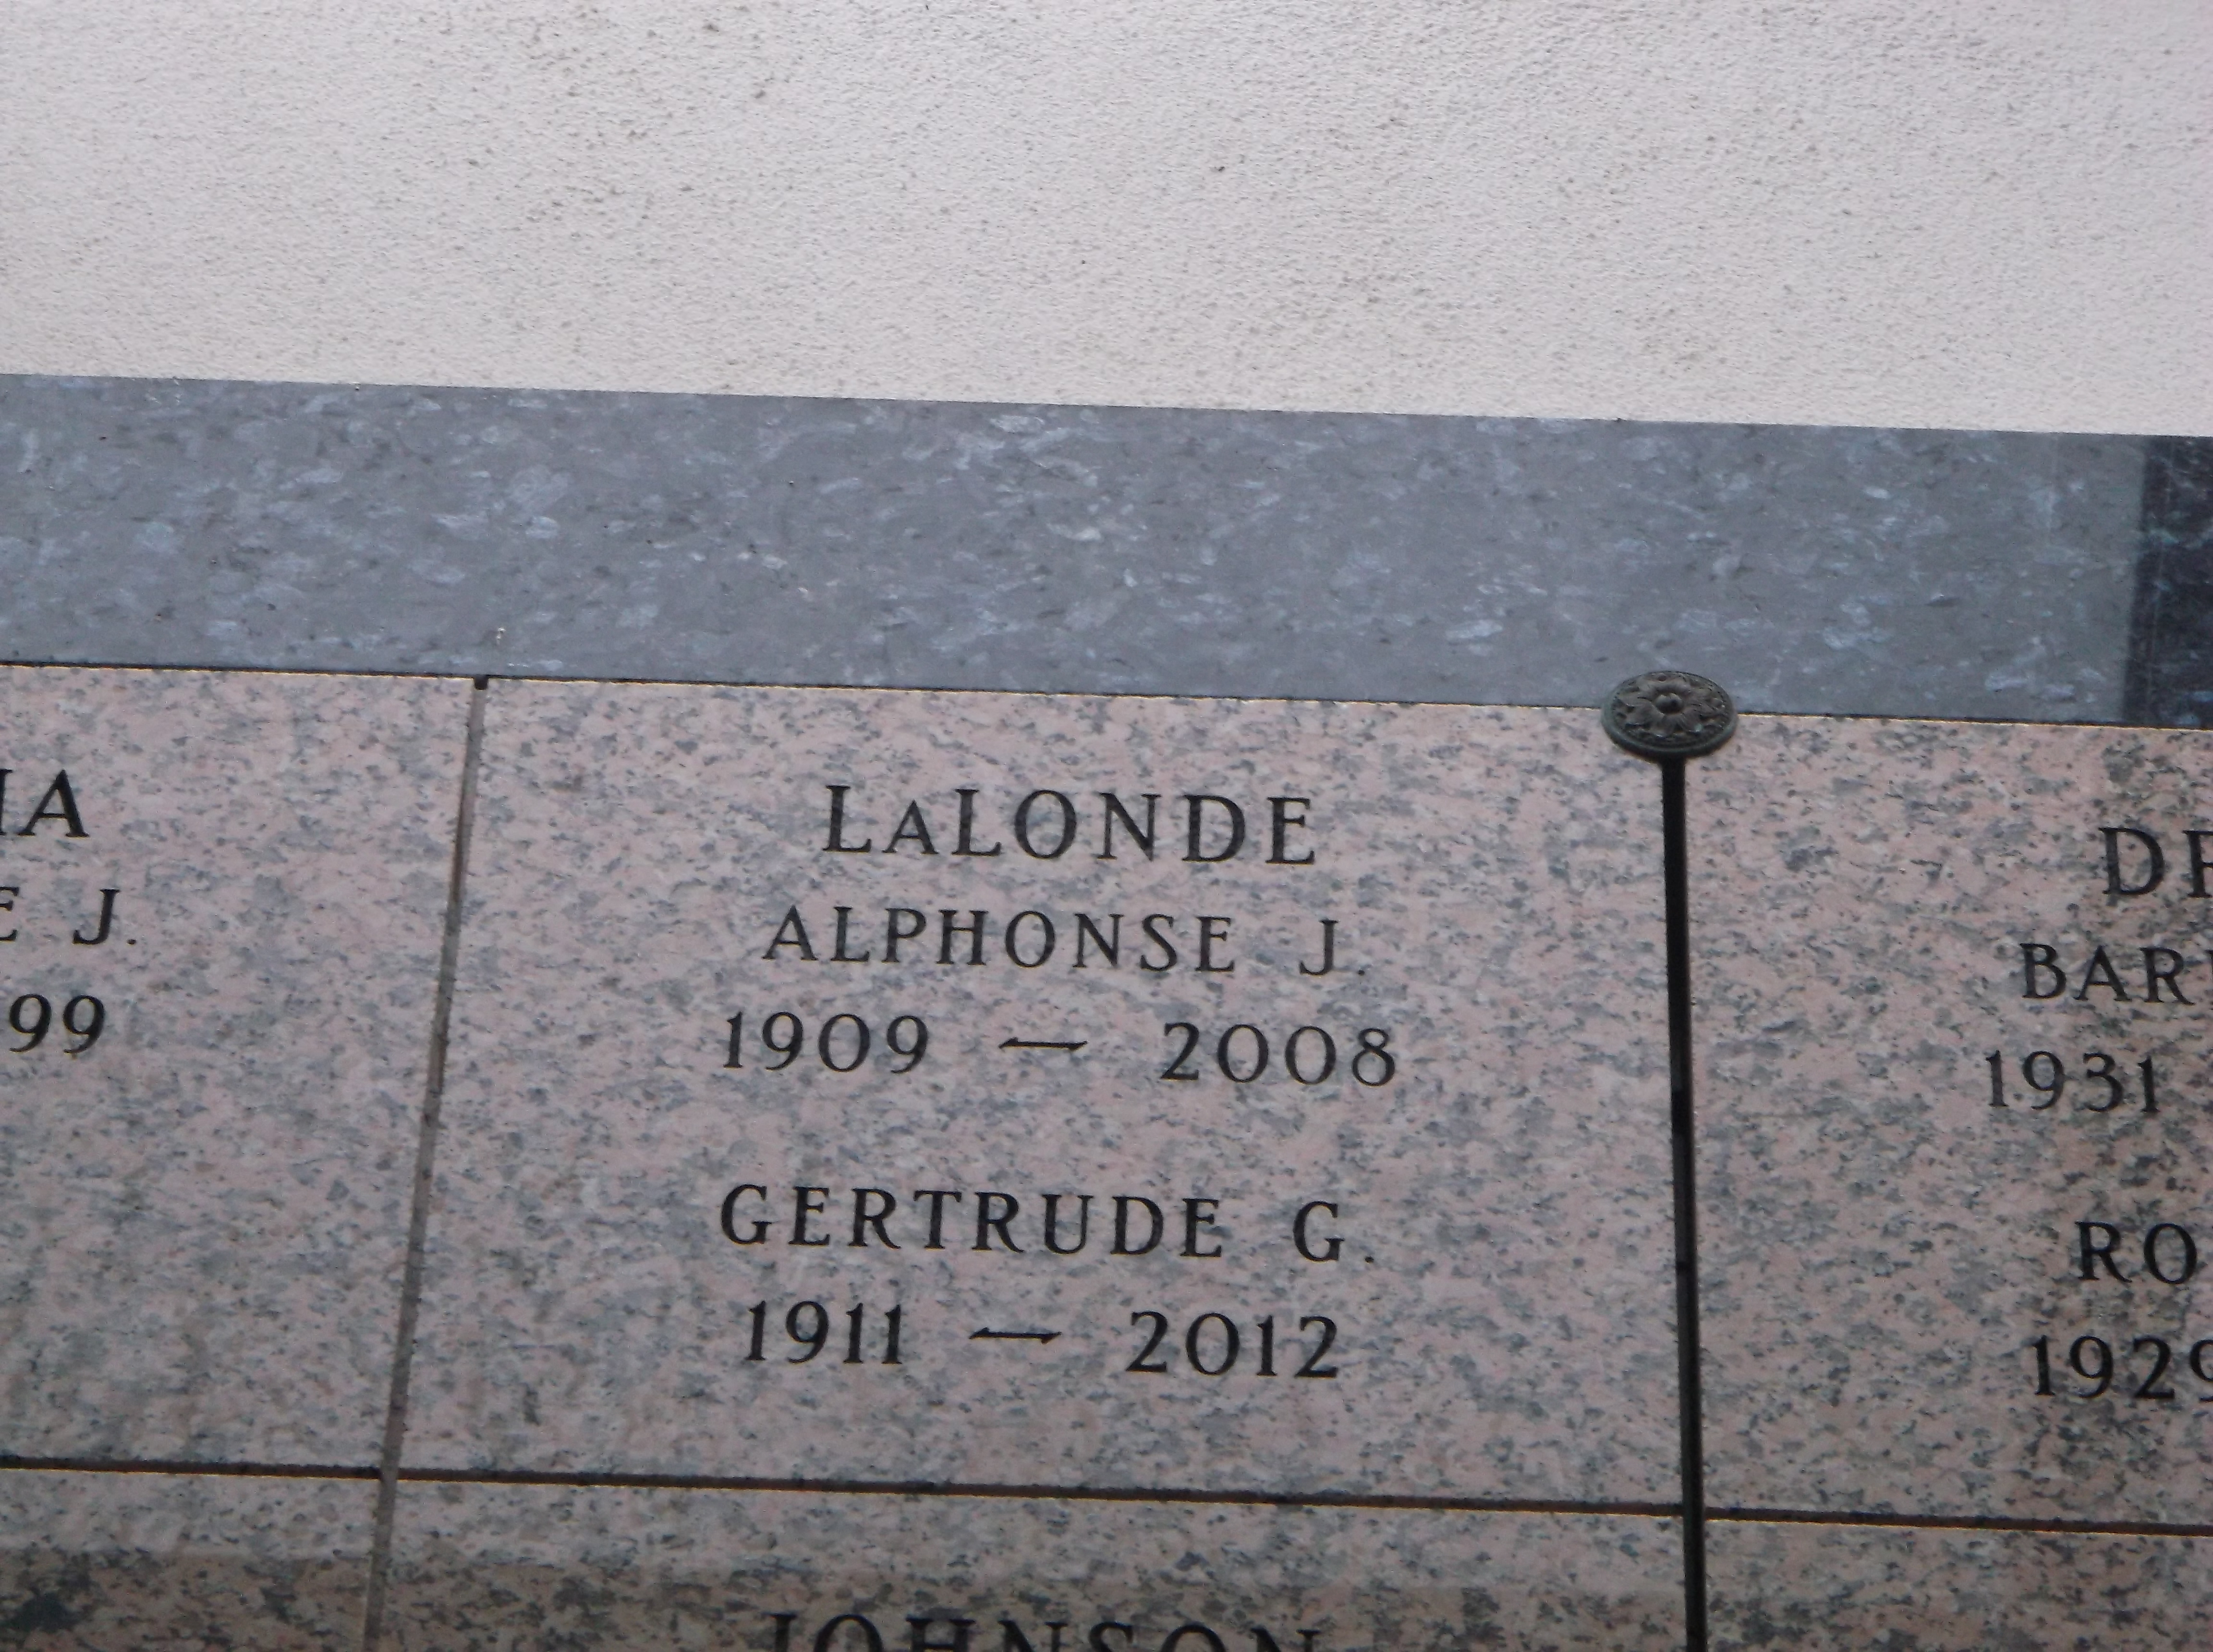 Gertrude G LaLonde